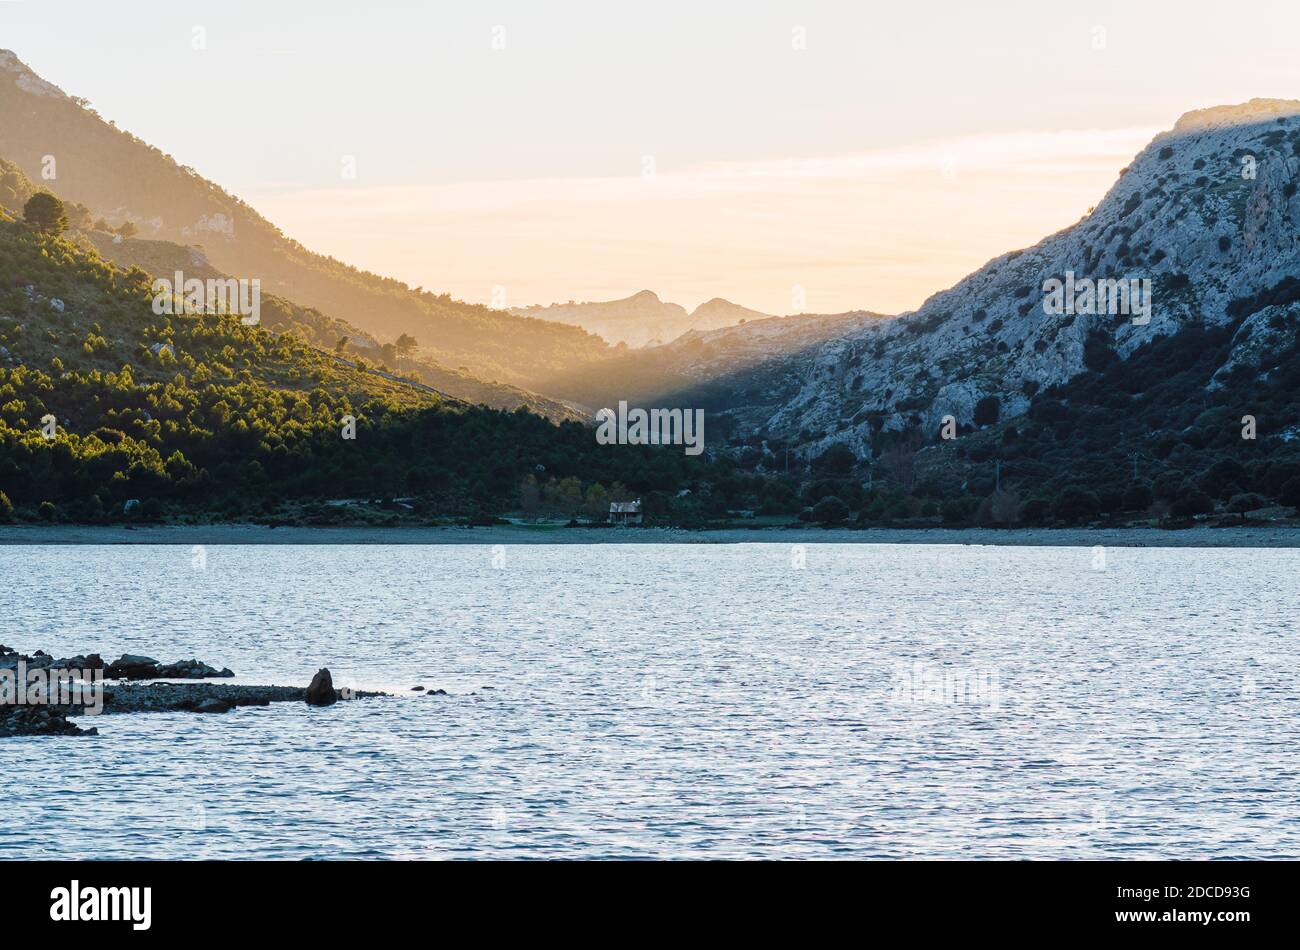 Paisaje al atardecer en Cuber Mallorca. Puesta de sol en un lago de montaña. "Sierra de tramuntana" Foto de stock